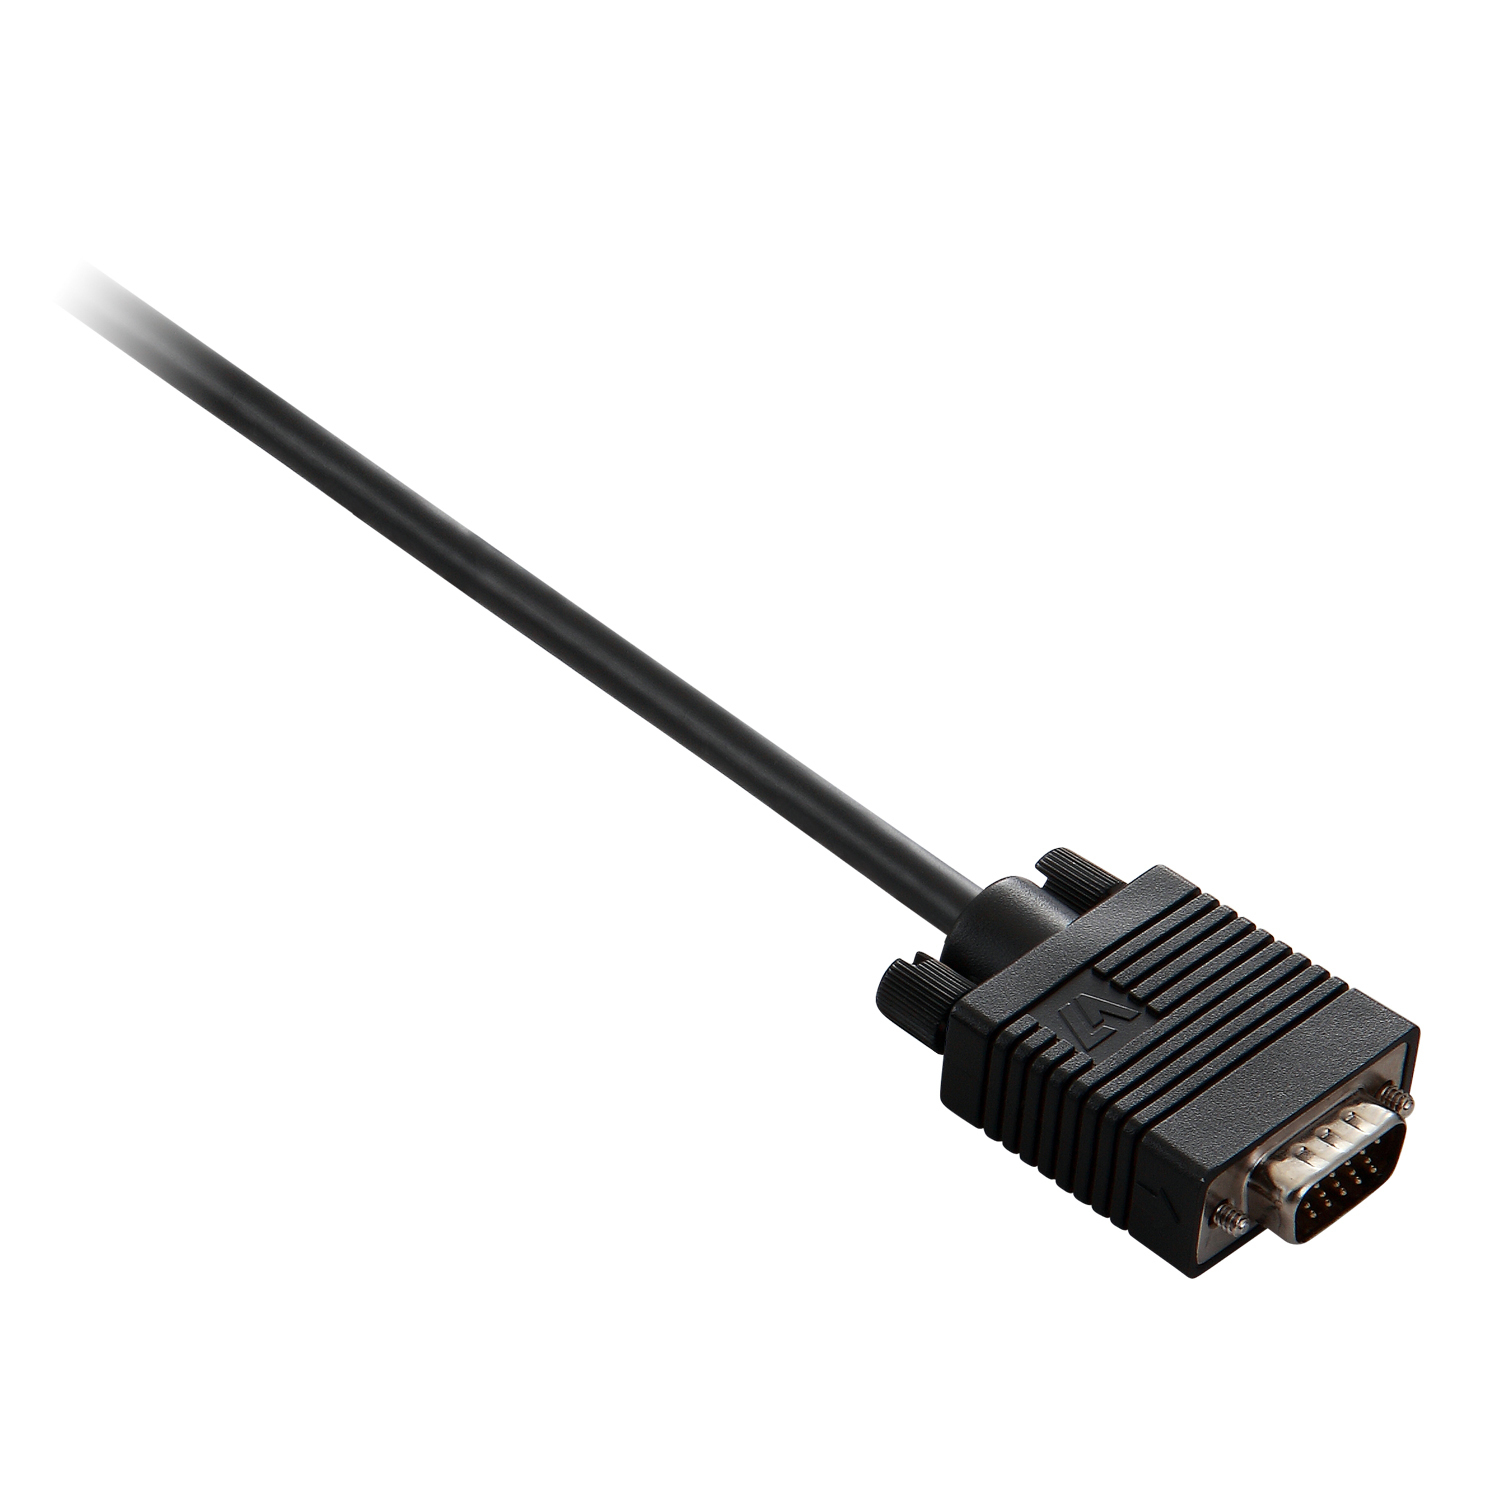 Photos - Cable (video, audio, USB) V7 Black Video Cable VGA Male to VGA Male 2m 6.6ft V7E2VGA-02M-BLK 